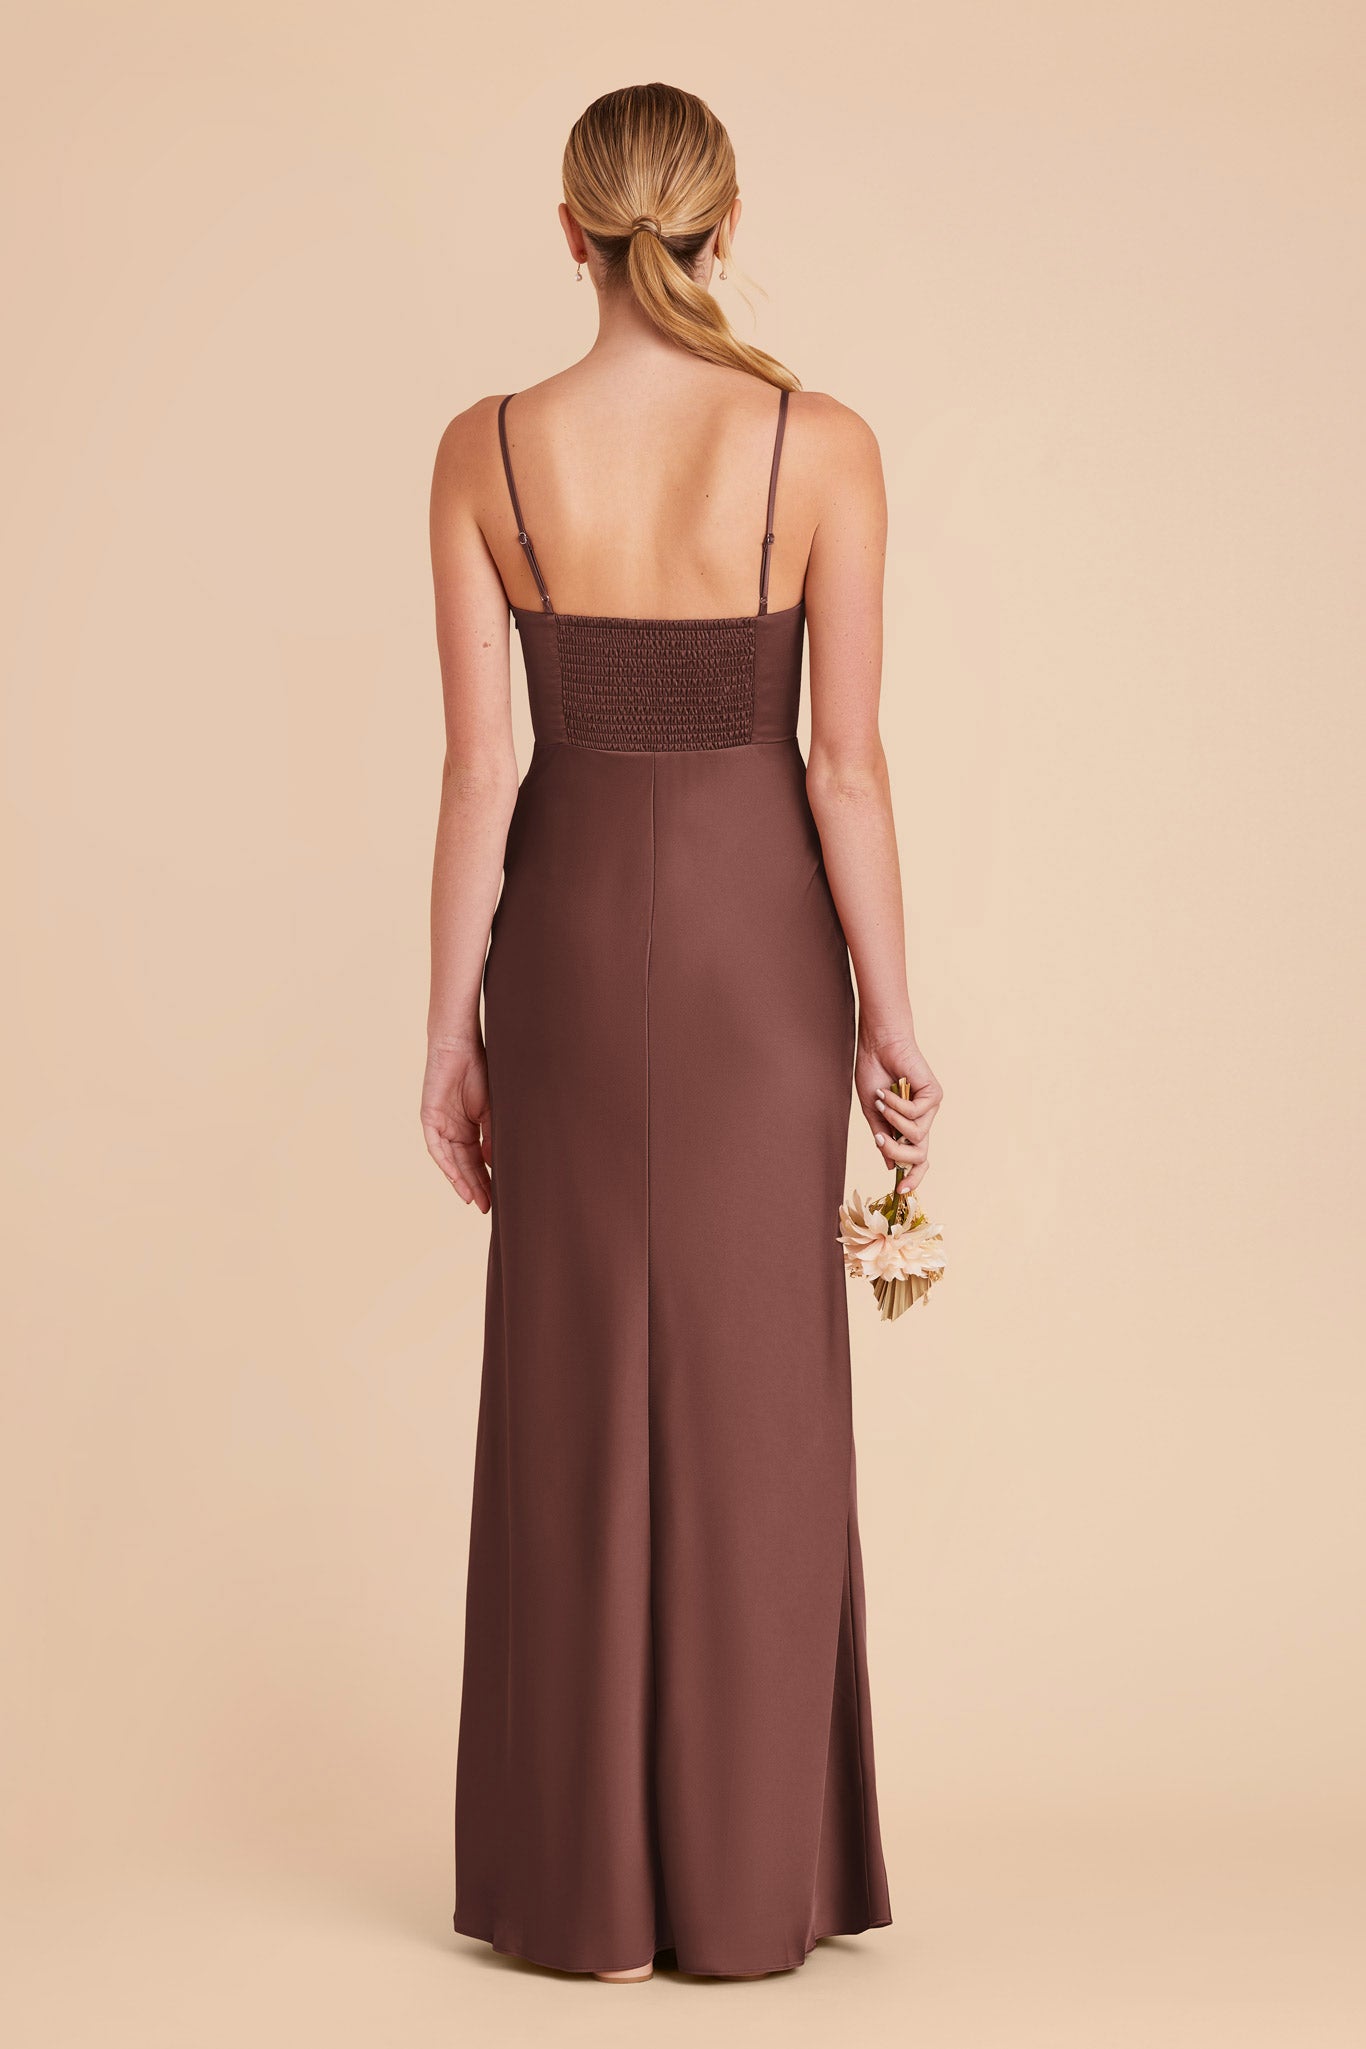 Chocolate Brown Jessica Matte Satin Dress by Birdy Grey